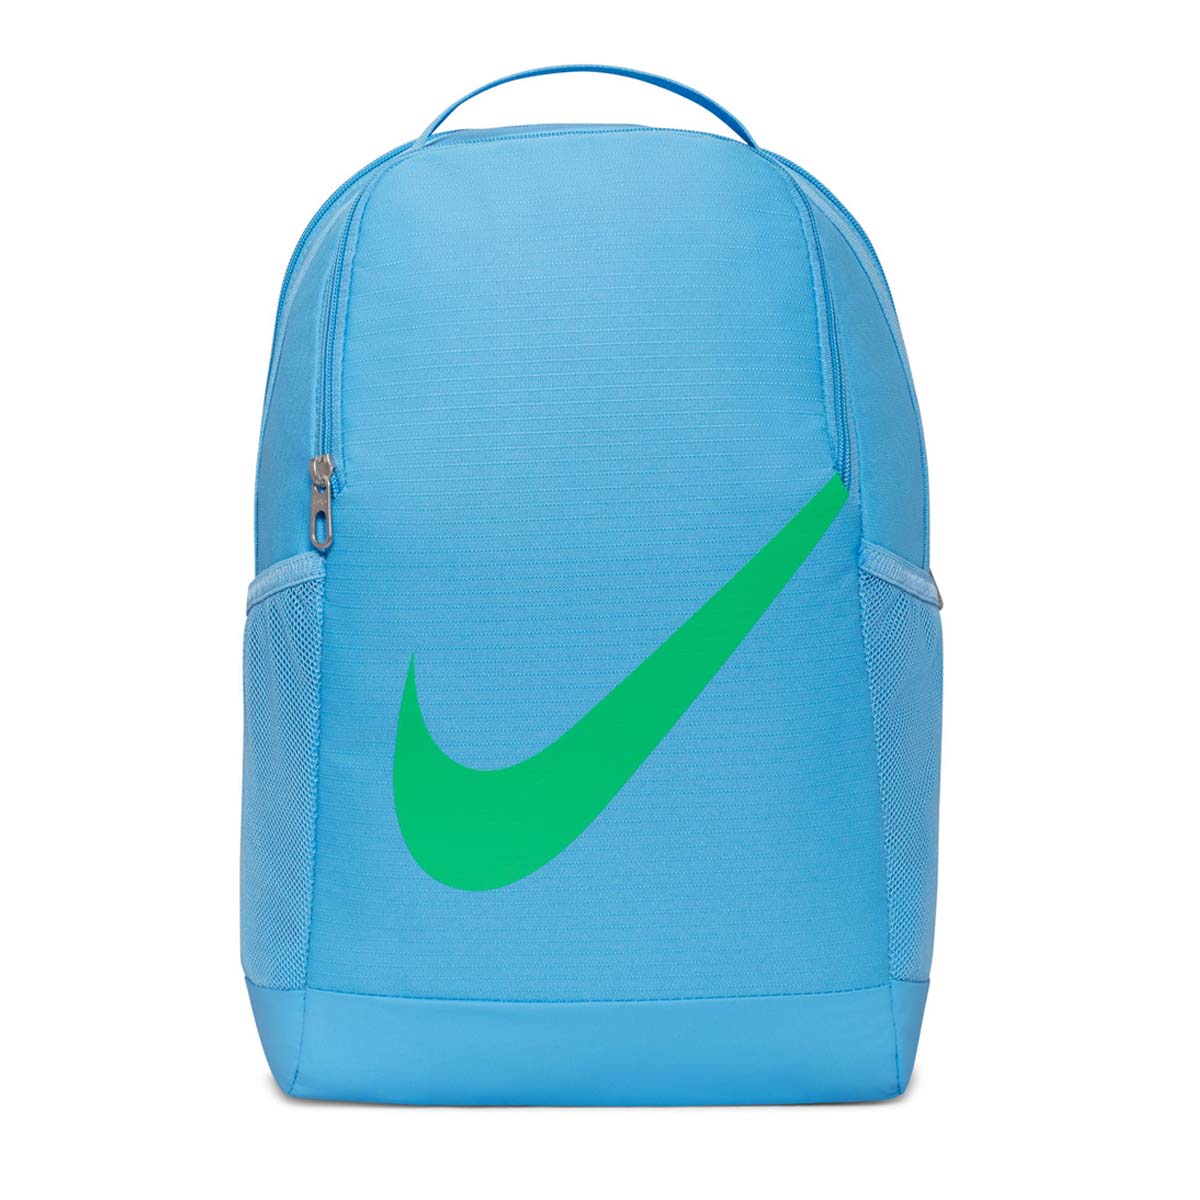 Nike One Womens Training Tote Bag (18L) DH4063 424 Cerulean Blue